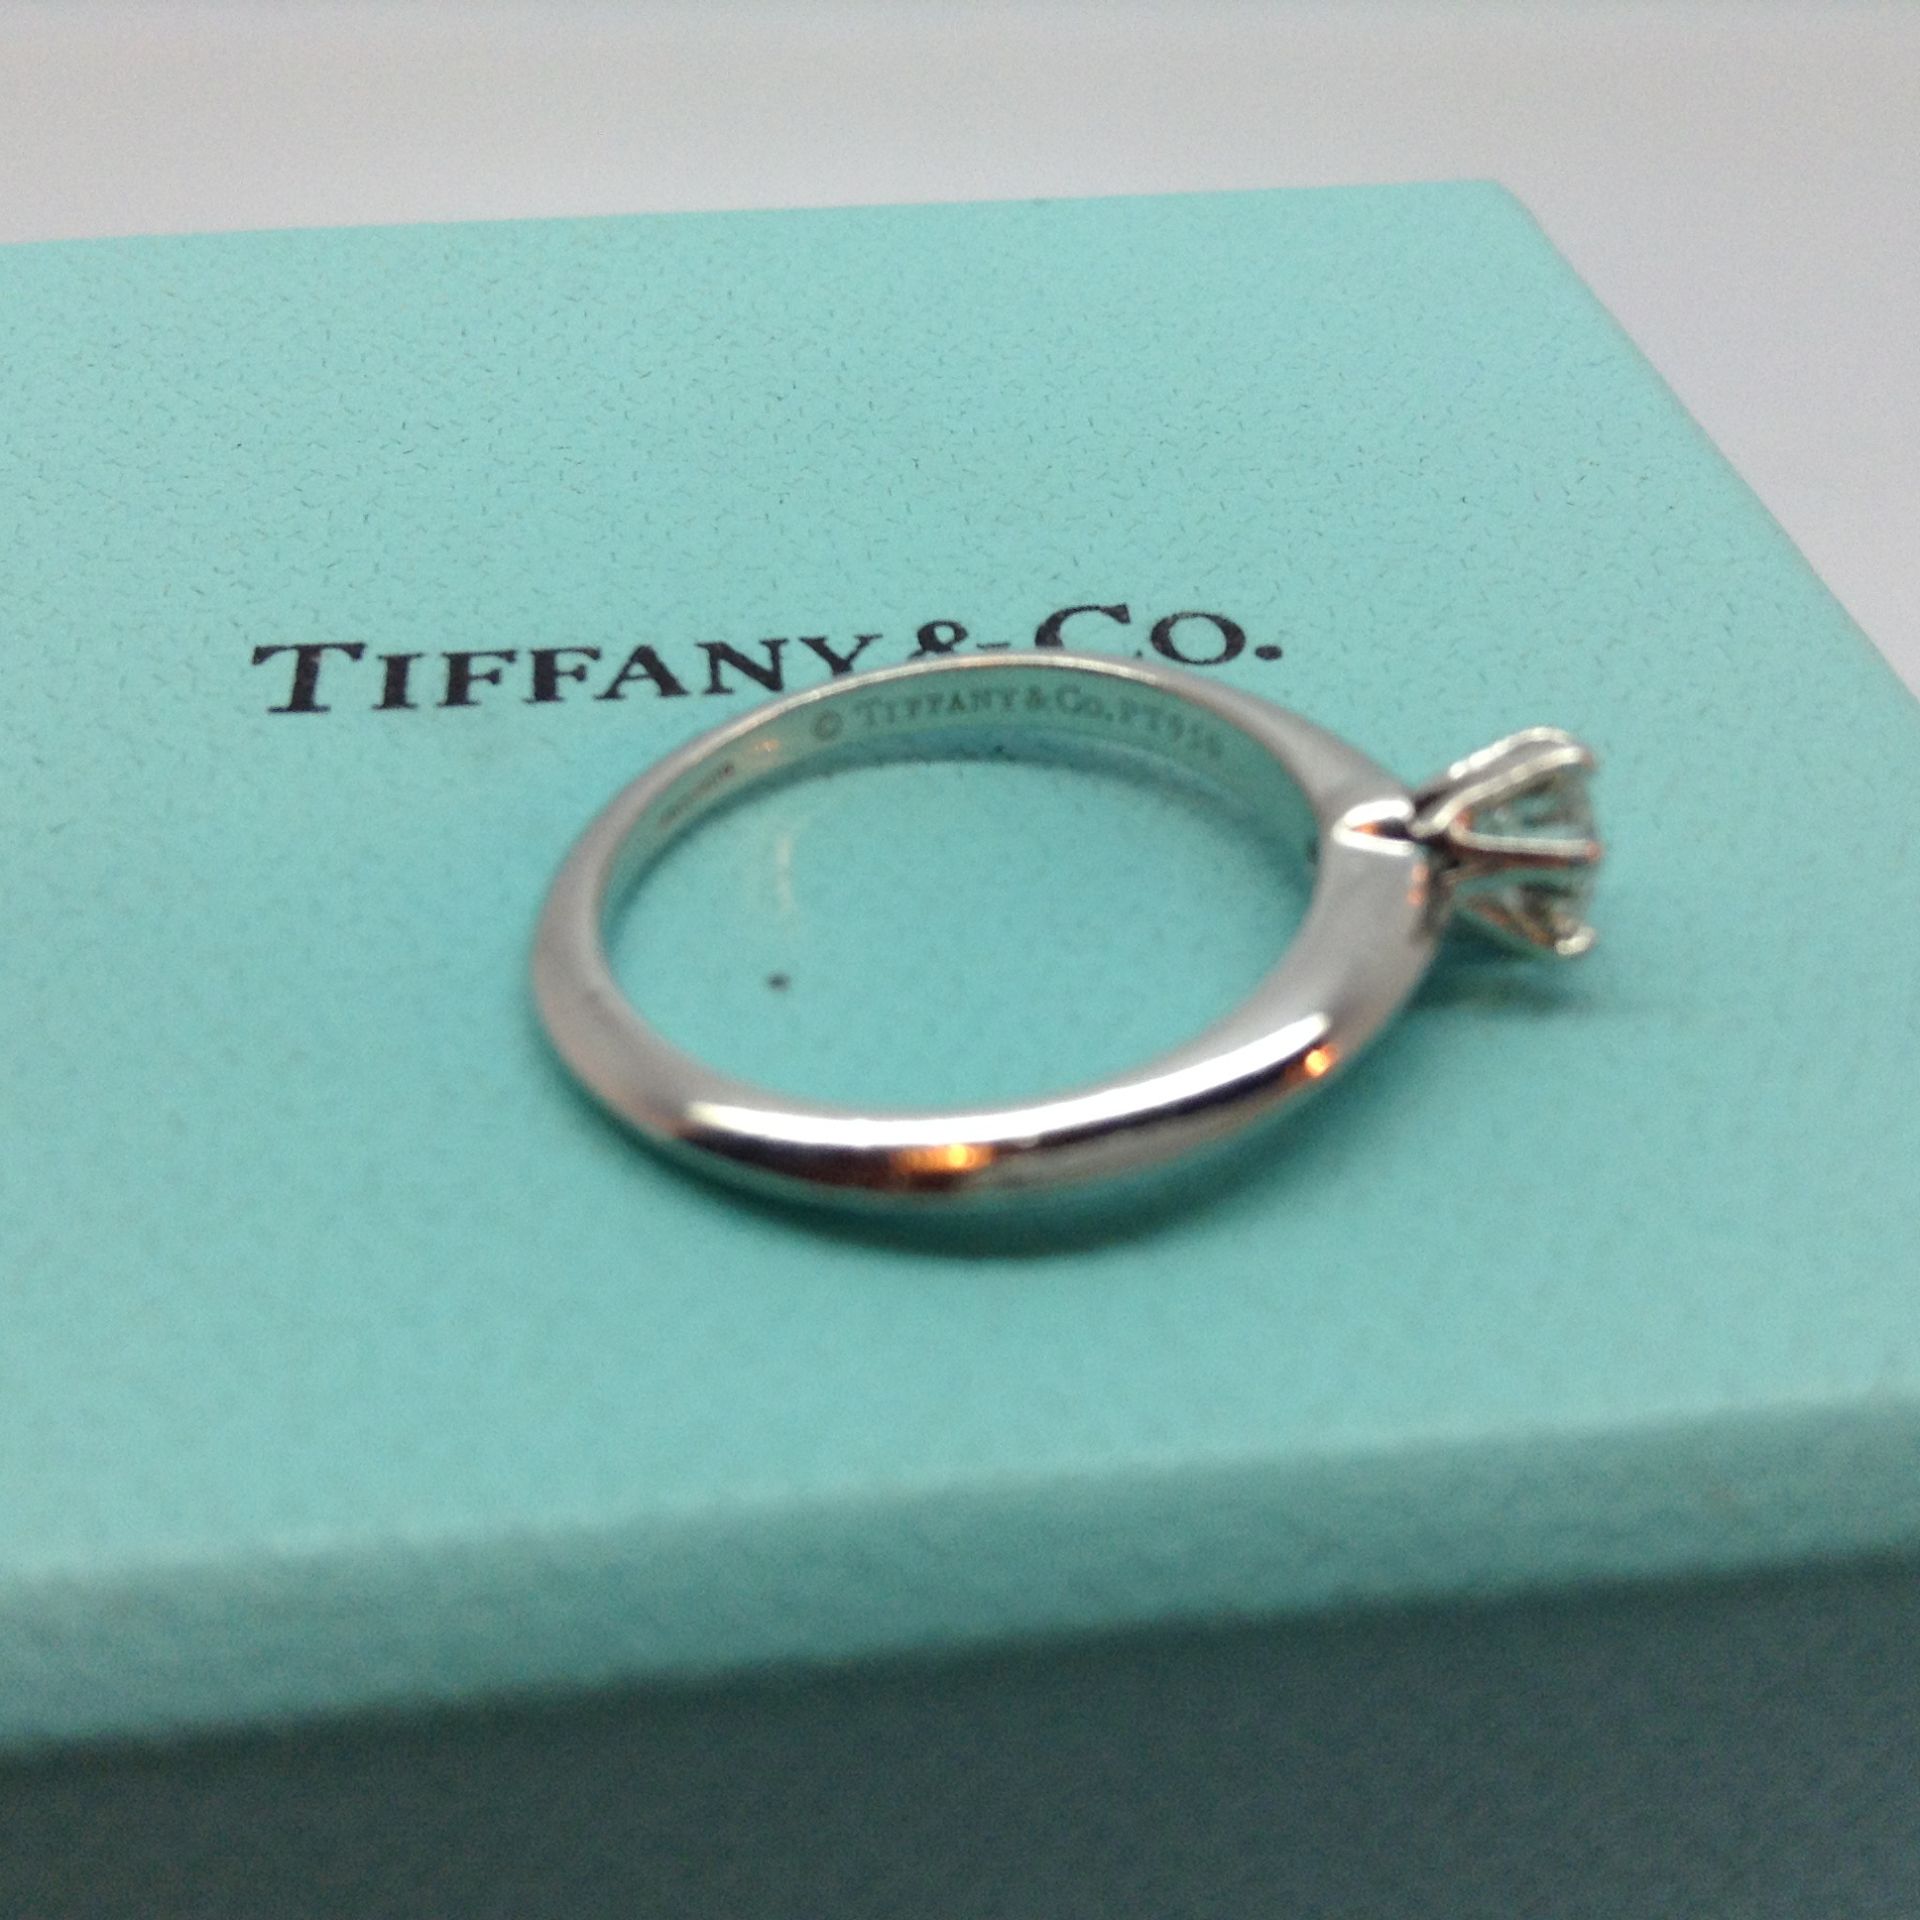 Tiffany & Co, Classic Round Brilliant Cut Diamond Platinum Engagement Ring 0.32 ct with Tiffany Box - Image 2 of 4